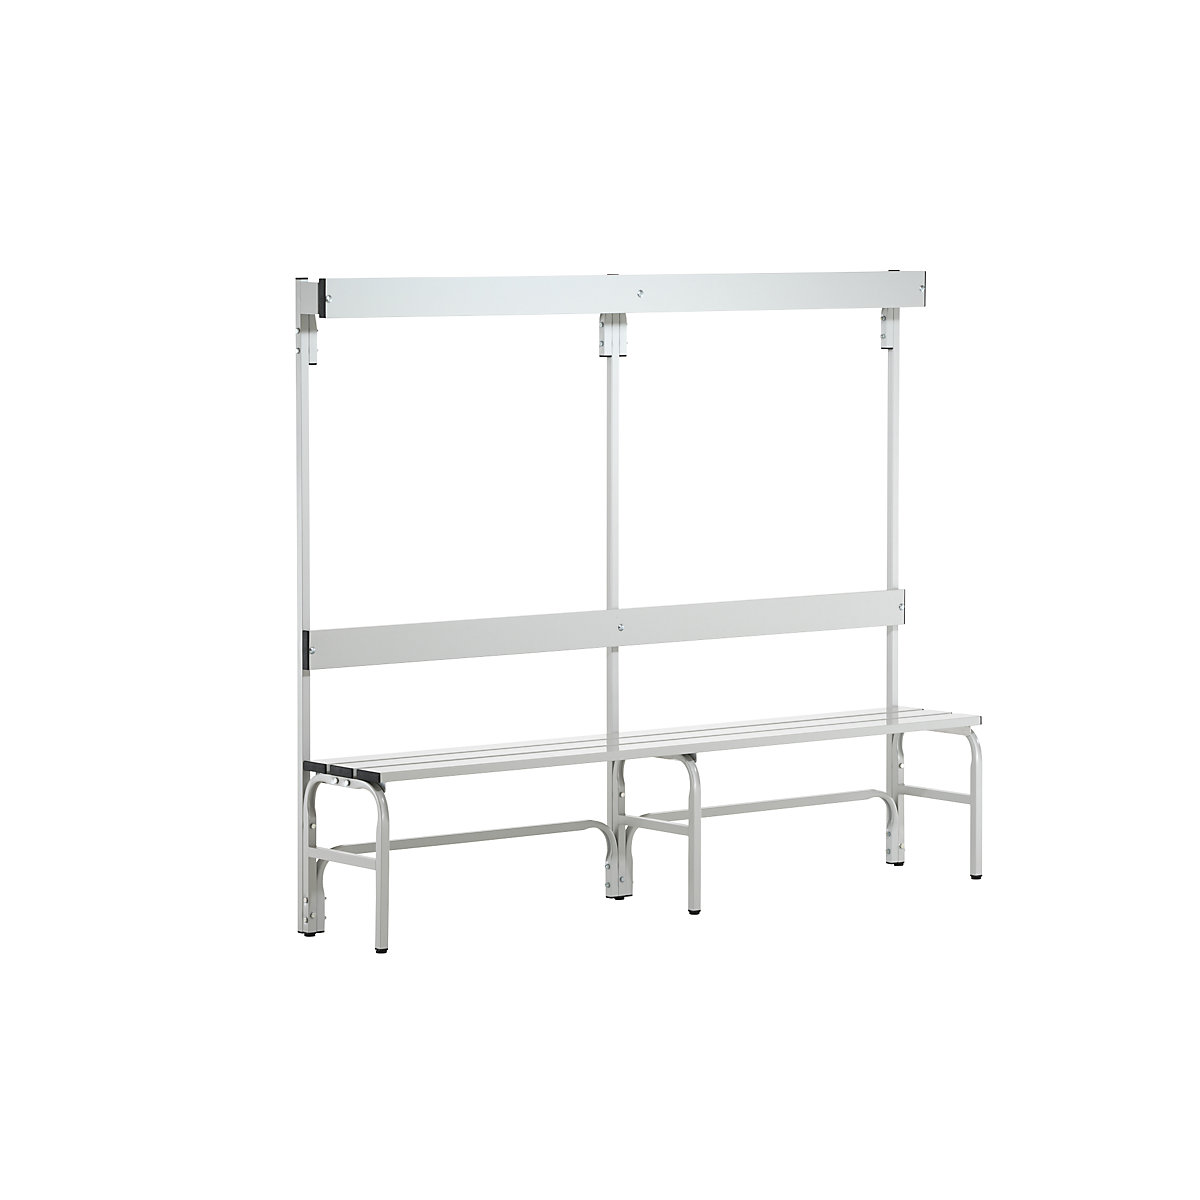 Sypro – Changing room bench with aluminium slats, HxD 1650 x 375 mm, single sided, length 1500 mm, 6 hooks, light grey